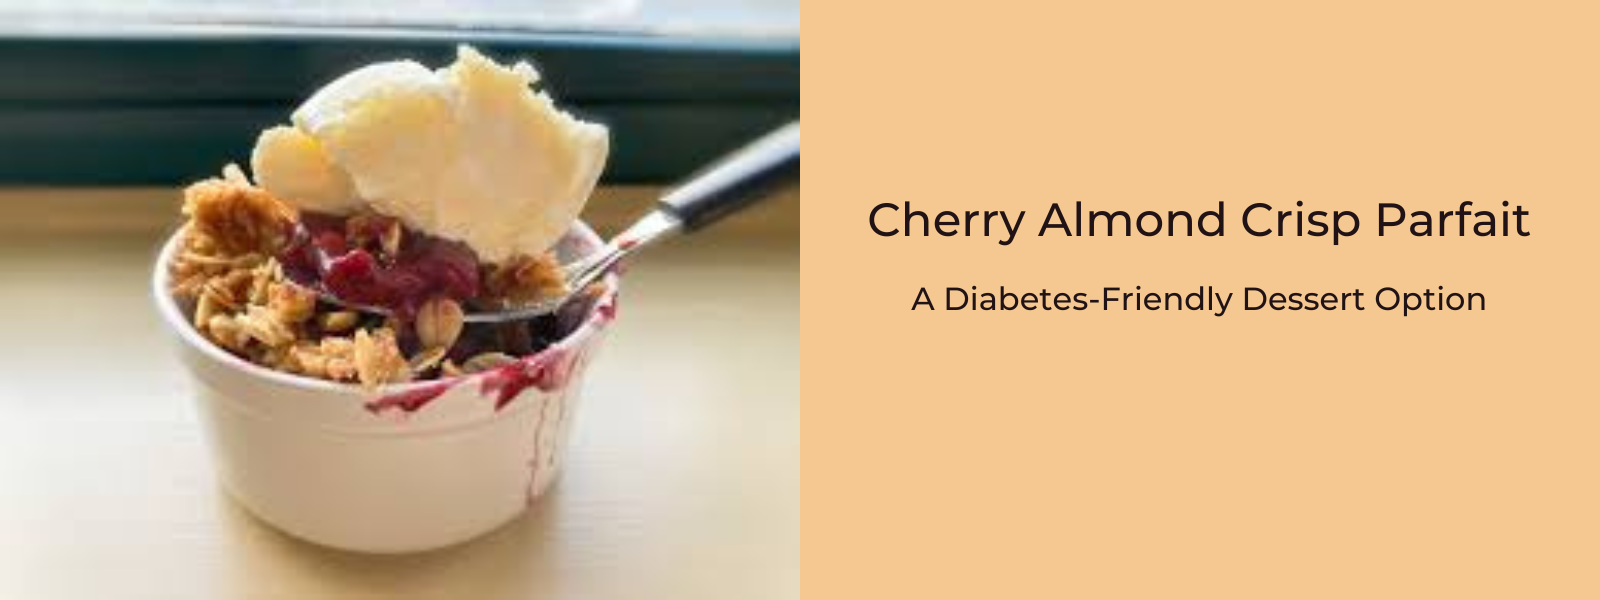 Cherry Almond Crisp: A Diabetes-Friendly Dessert Option